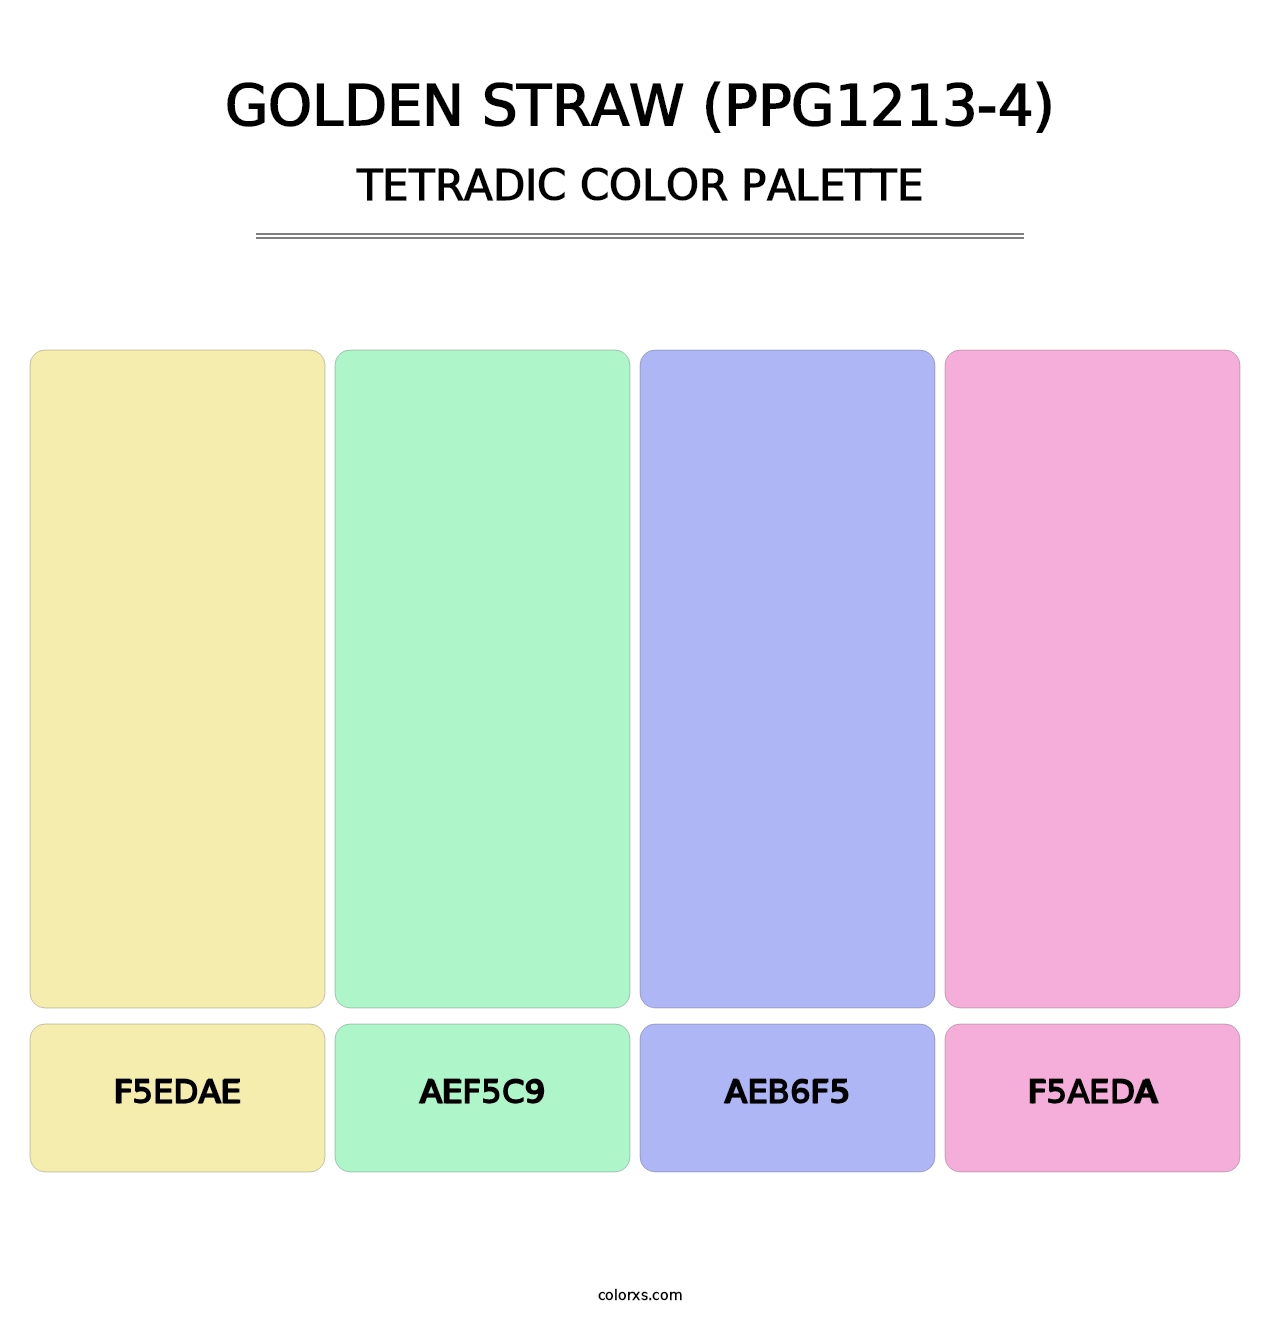 Golden Straw (PPG1213-4) - Tetradic Color Palette